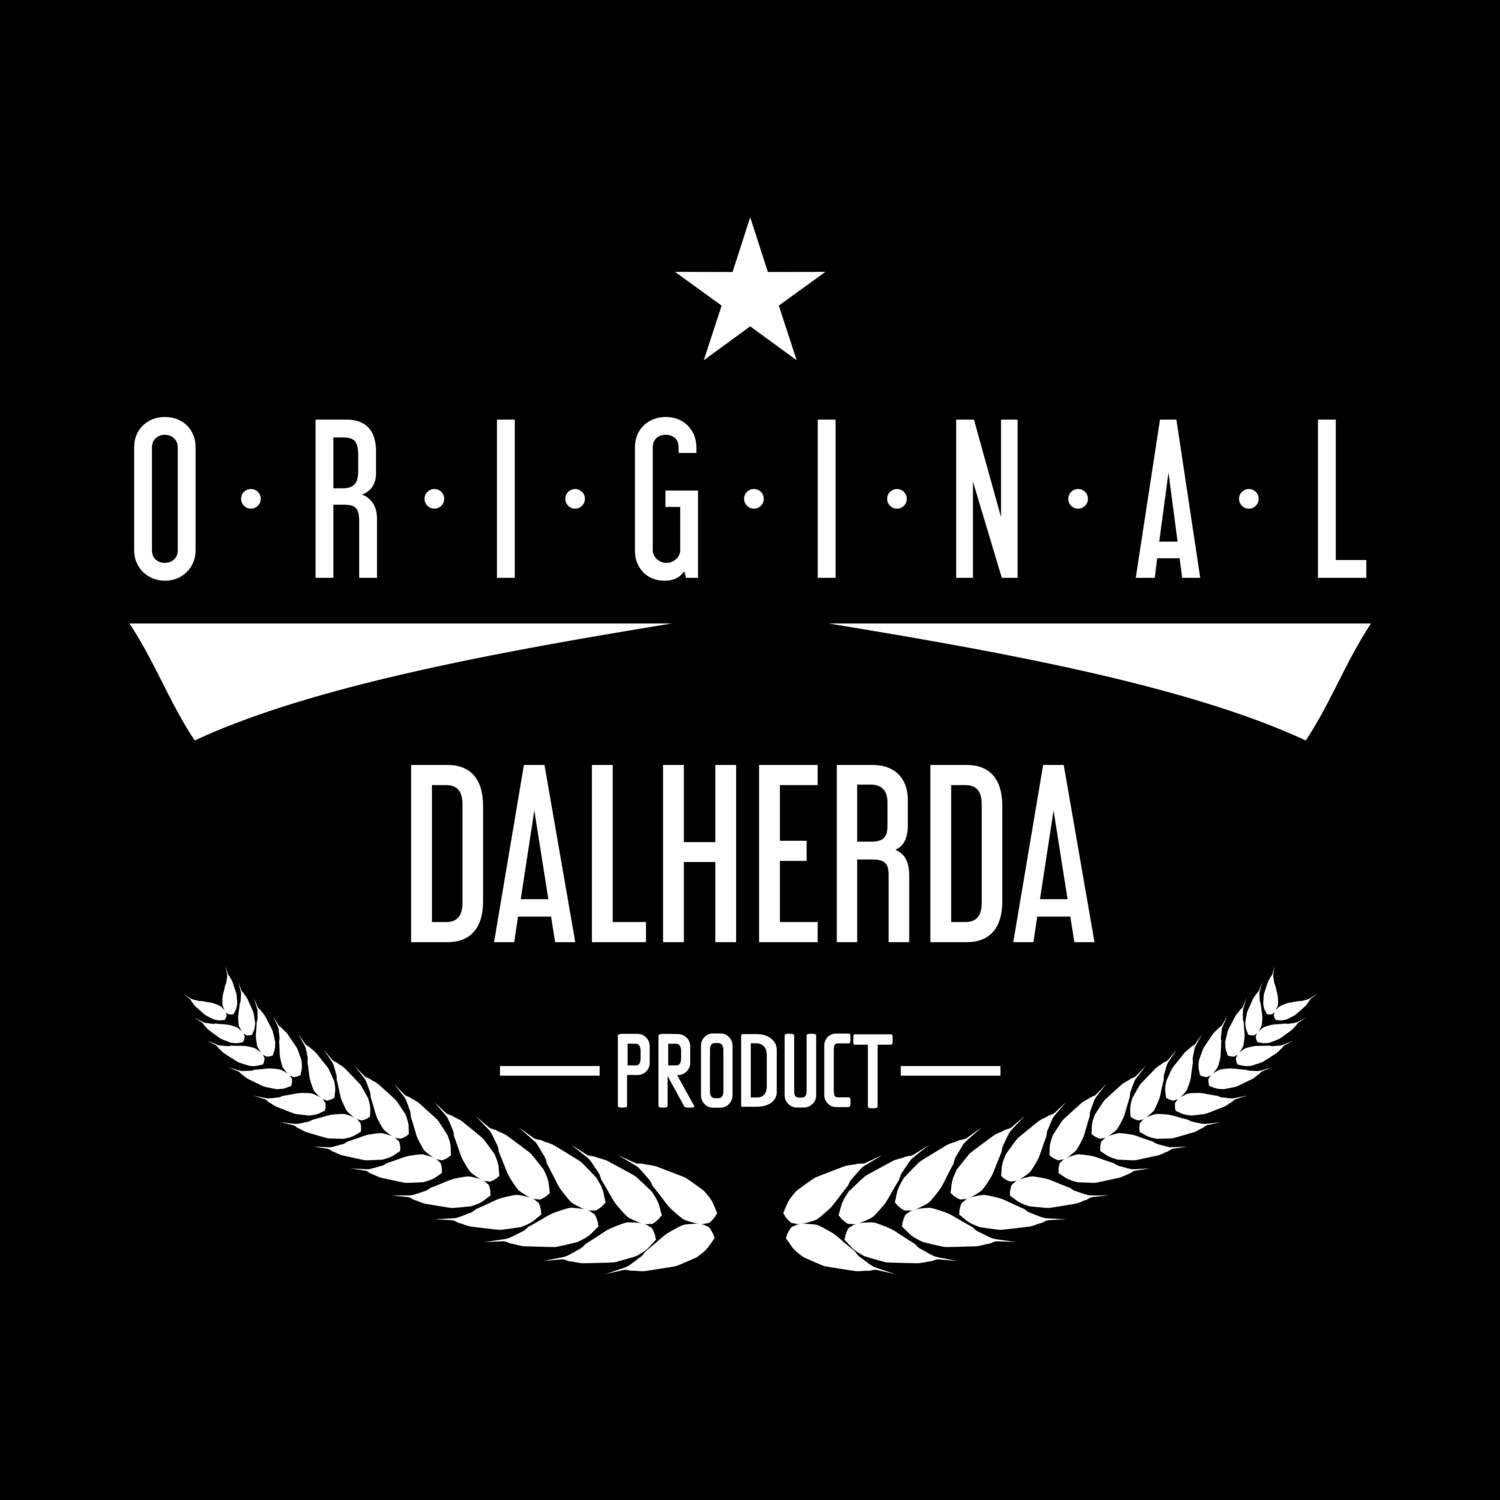 Dalherda T-Shirt »Original Product«